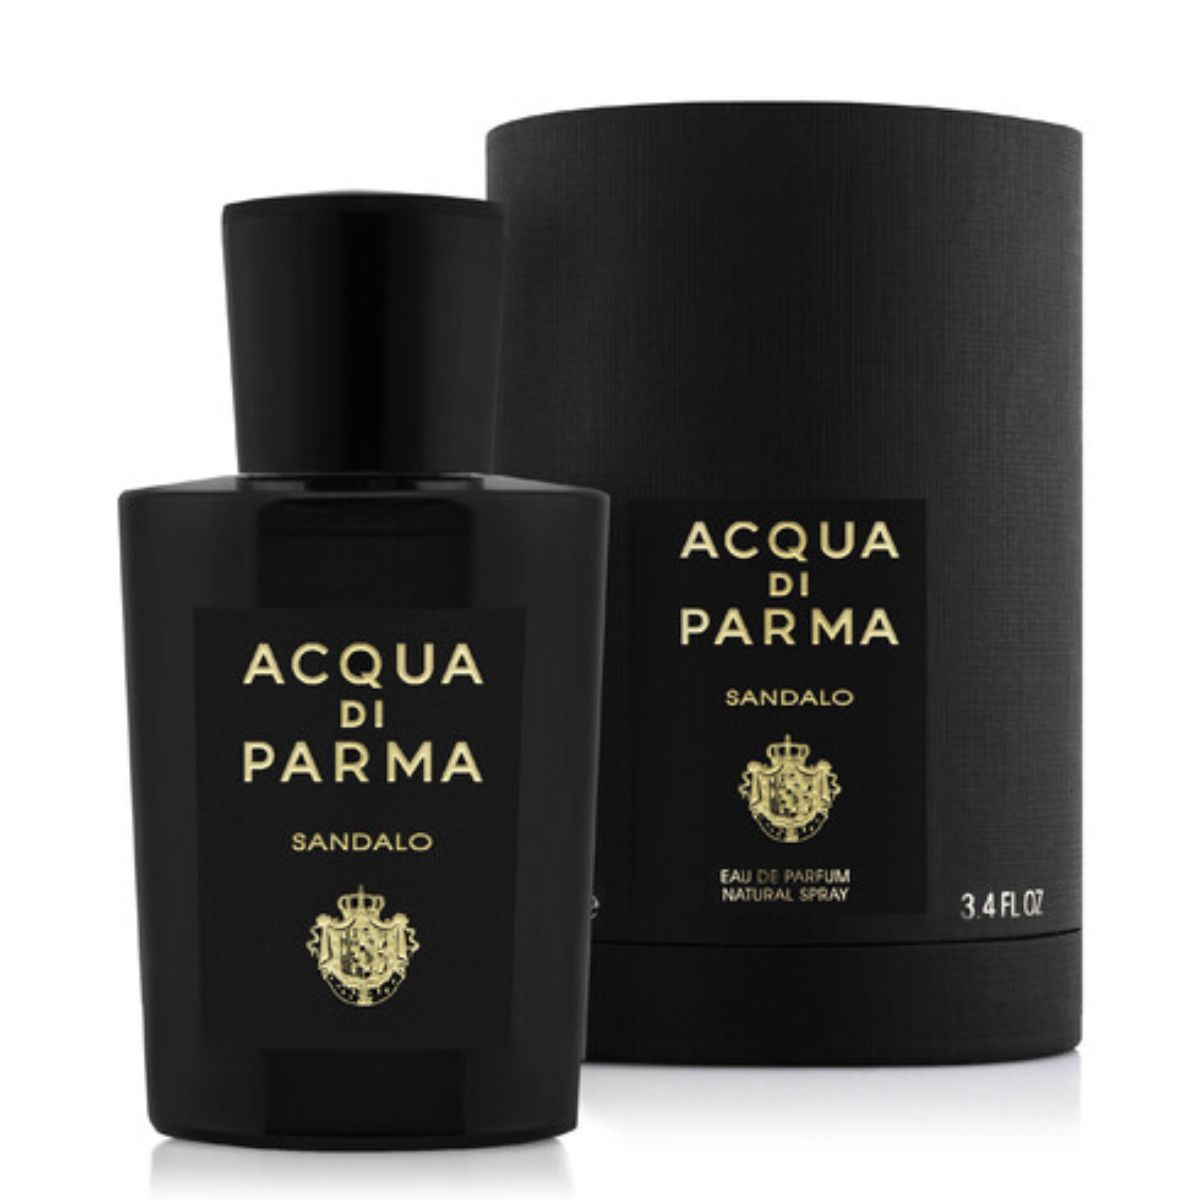 Acqua Di Parma Signature Sandalo Eau De Parfum